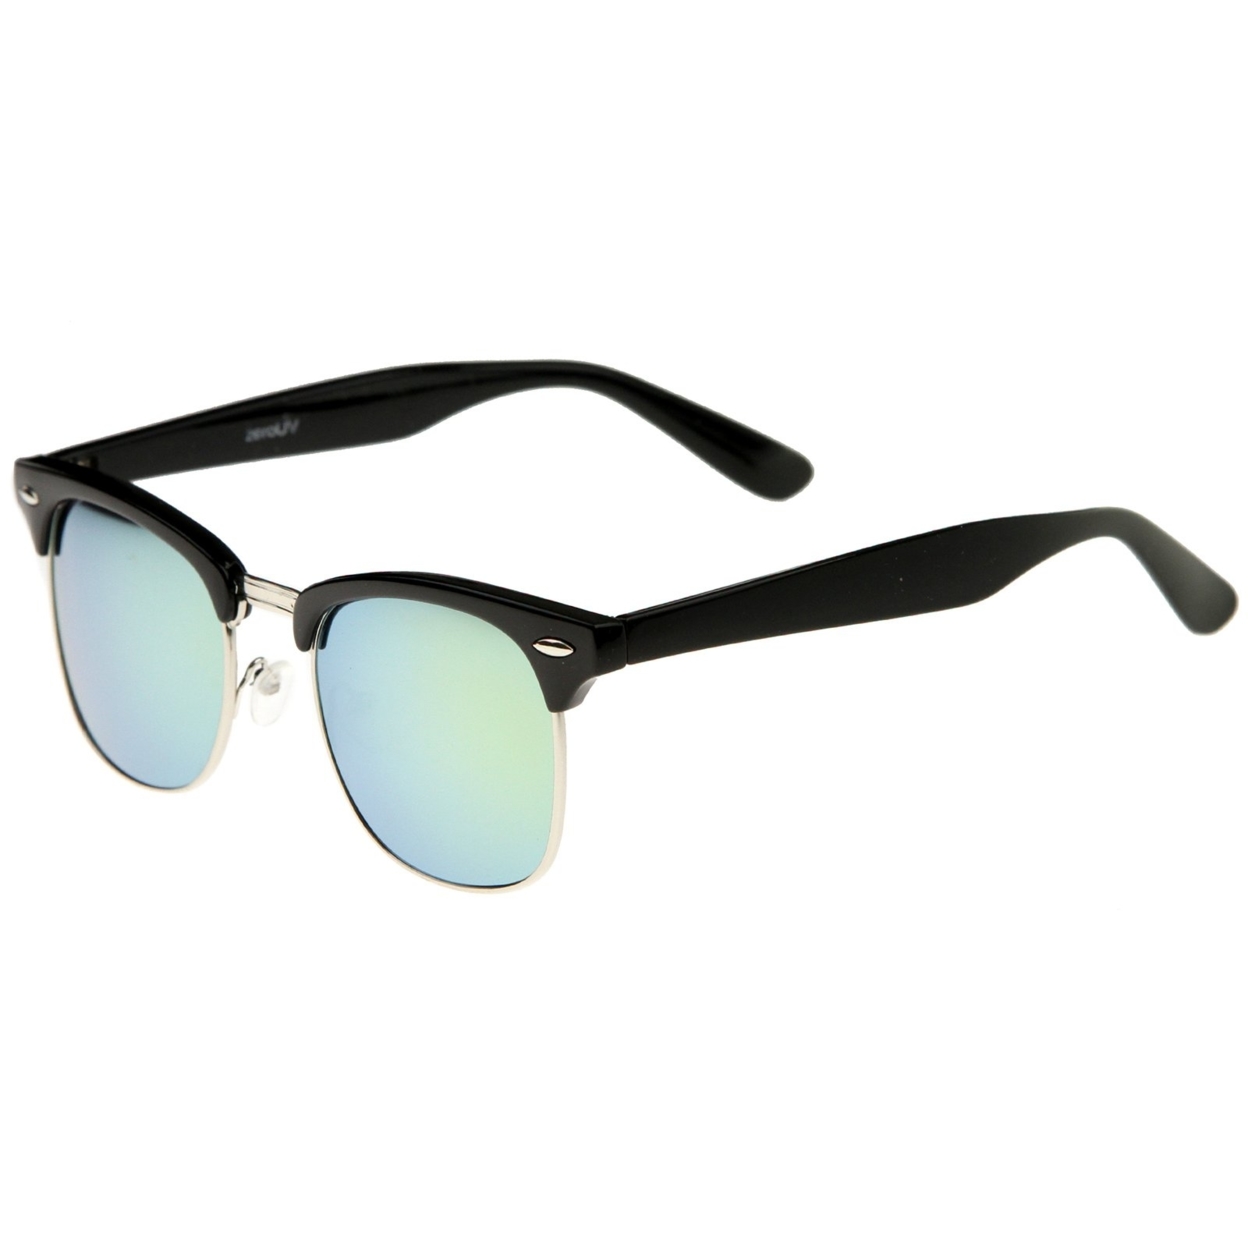 Premium Half Frame Colored Mirror Lens Horn Rimmed Sunglasses 50mm - Tortoise-Gold / Blue Mirror